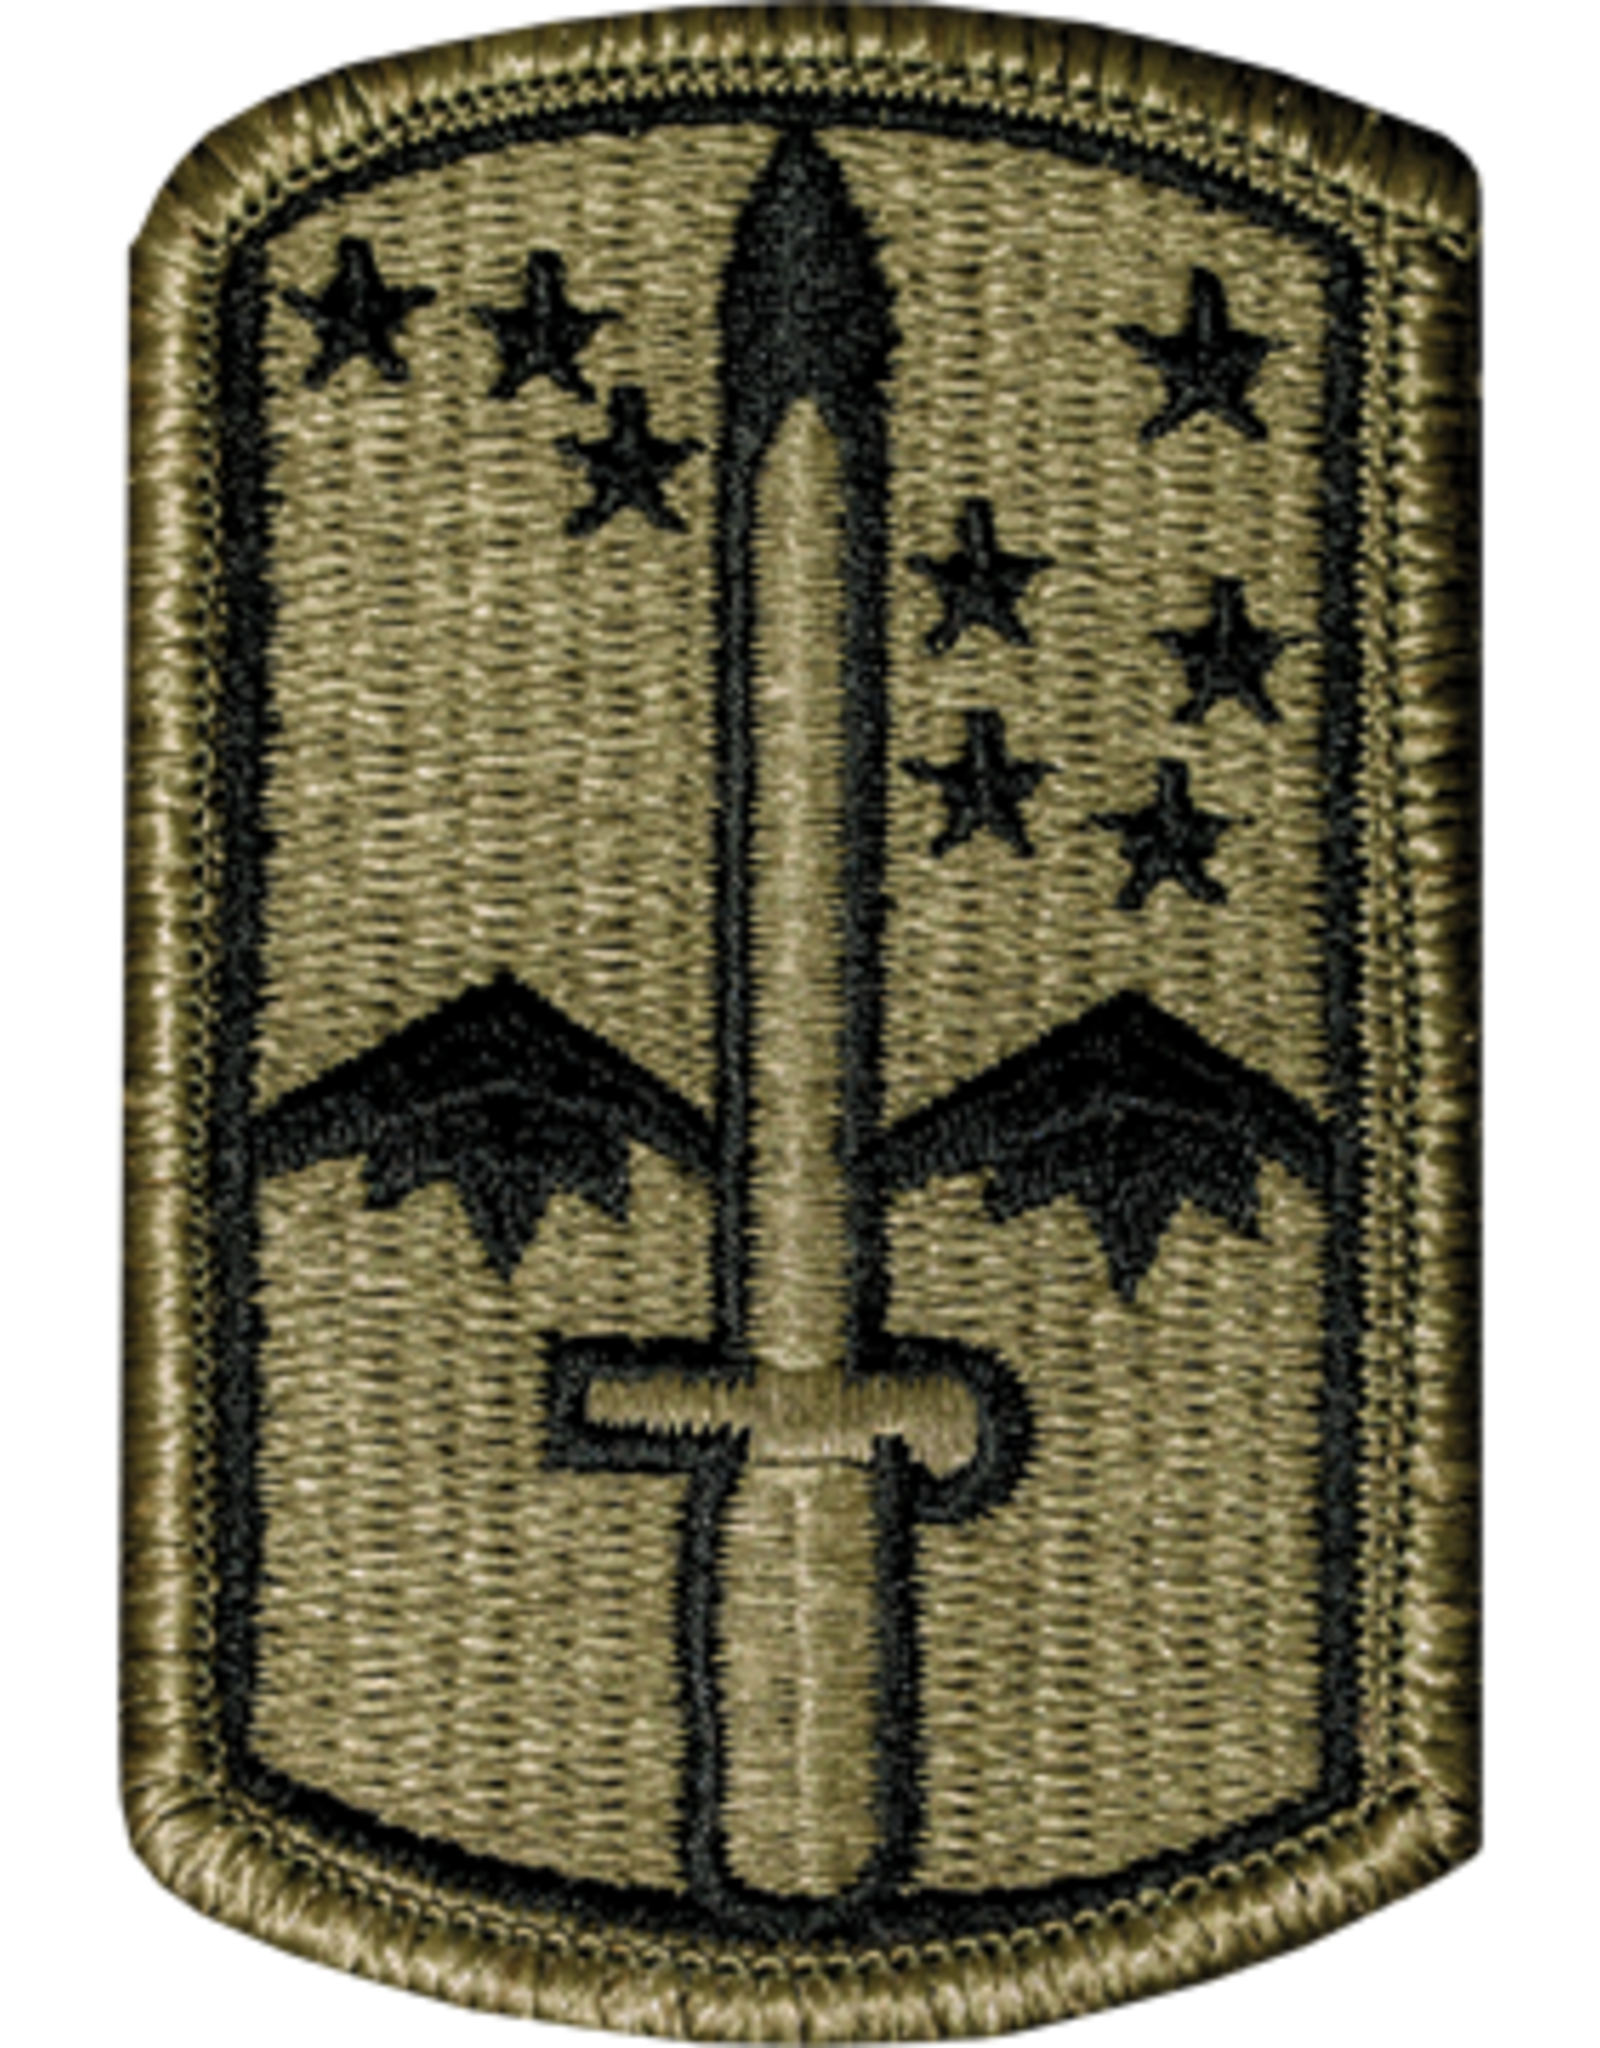 172nd Infantry Patch